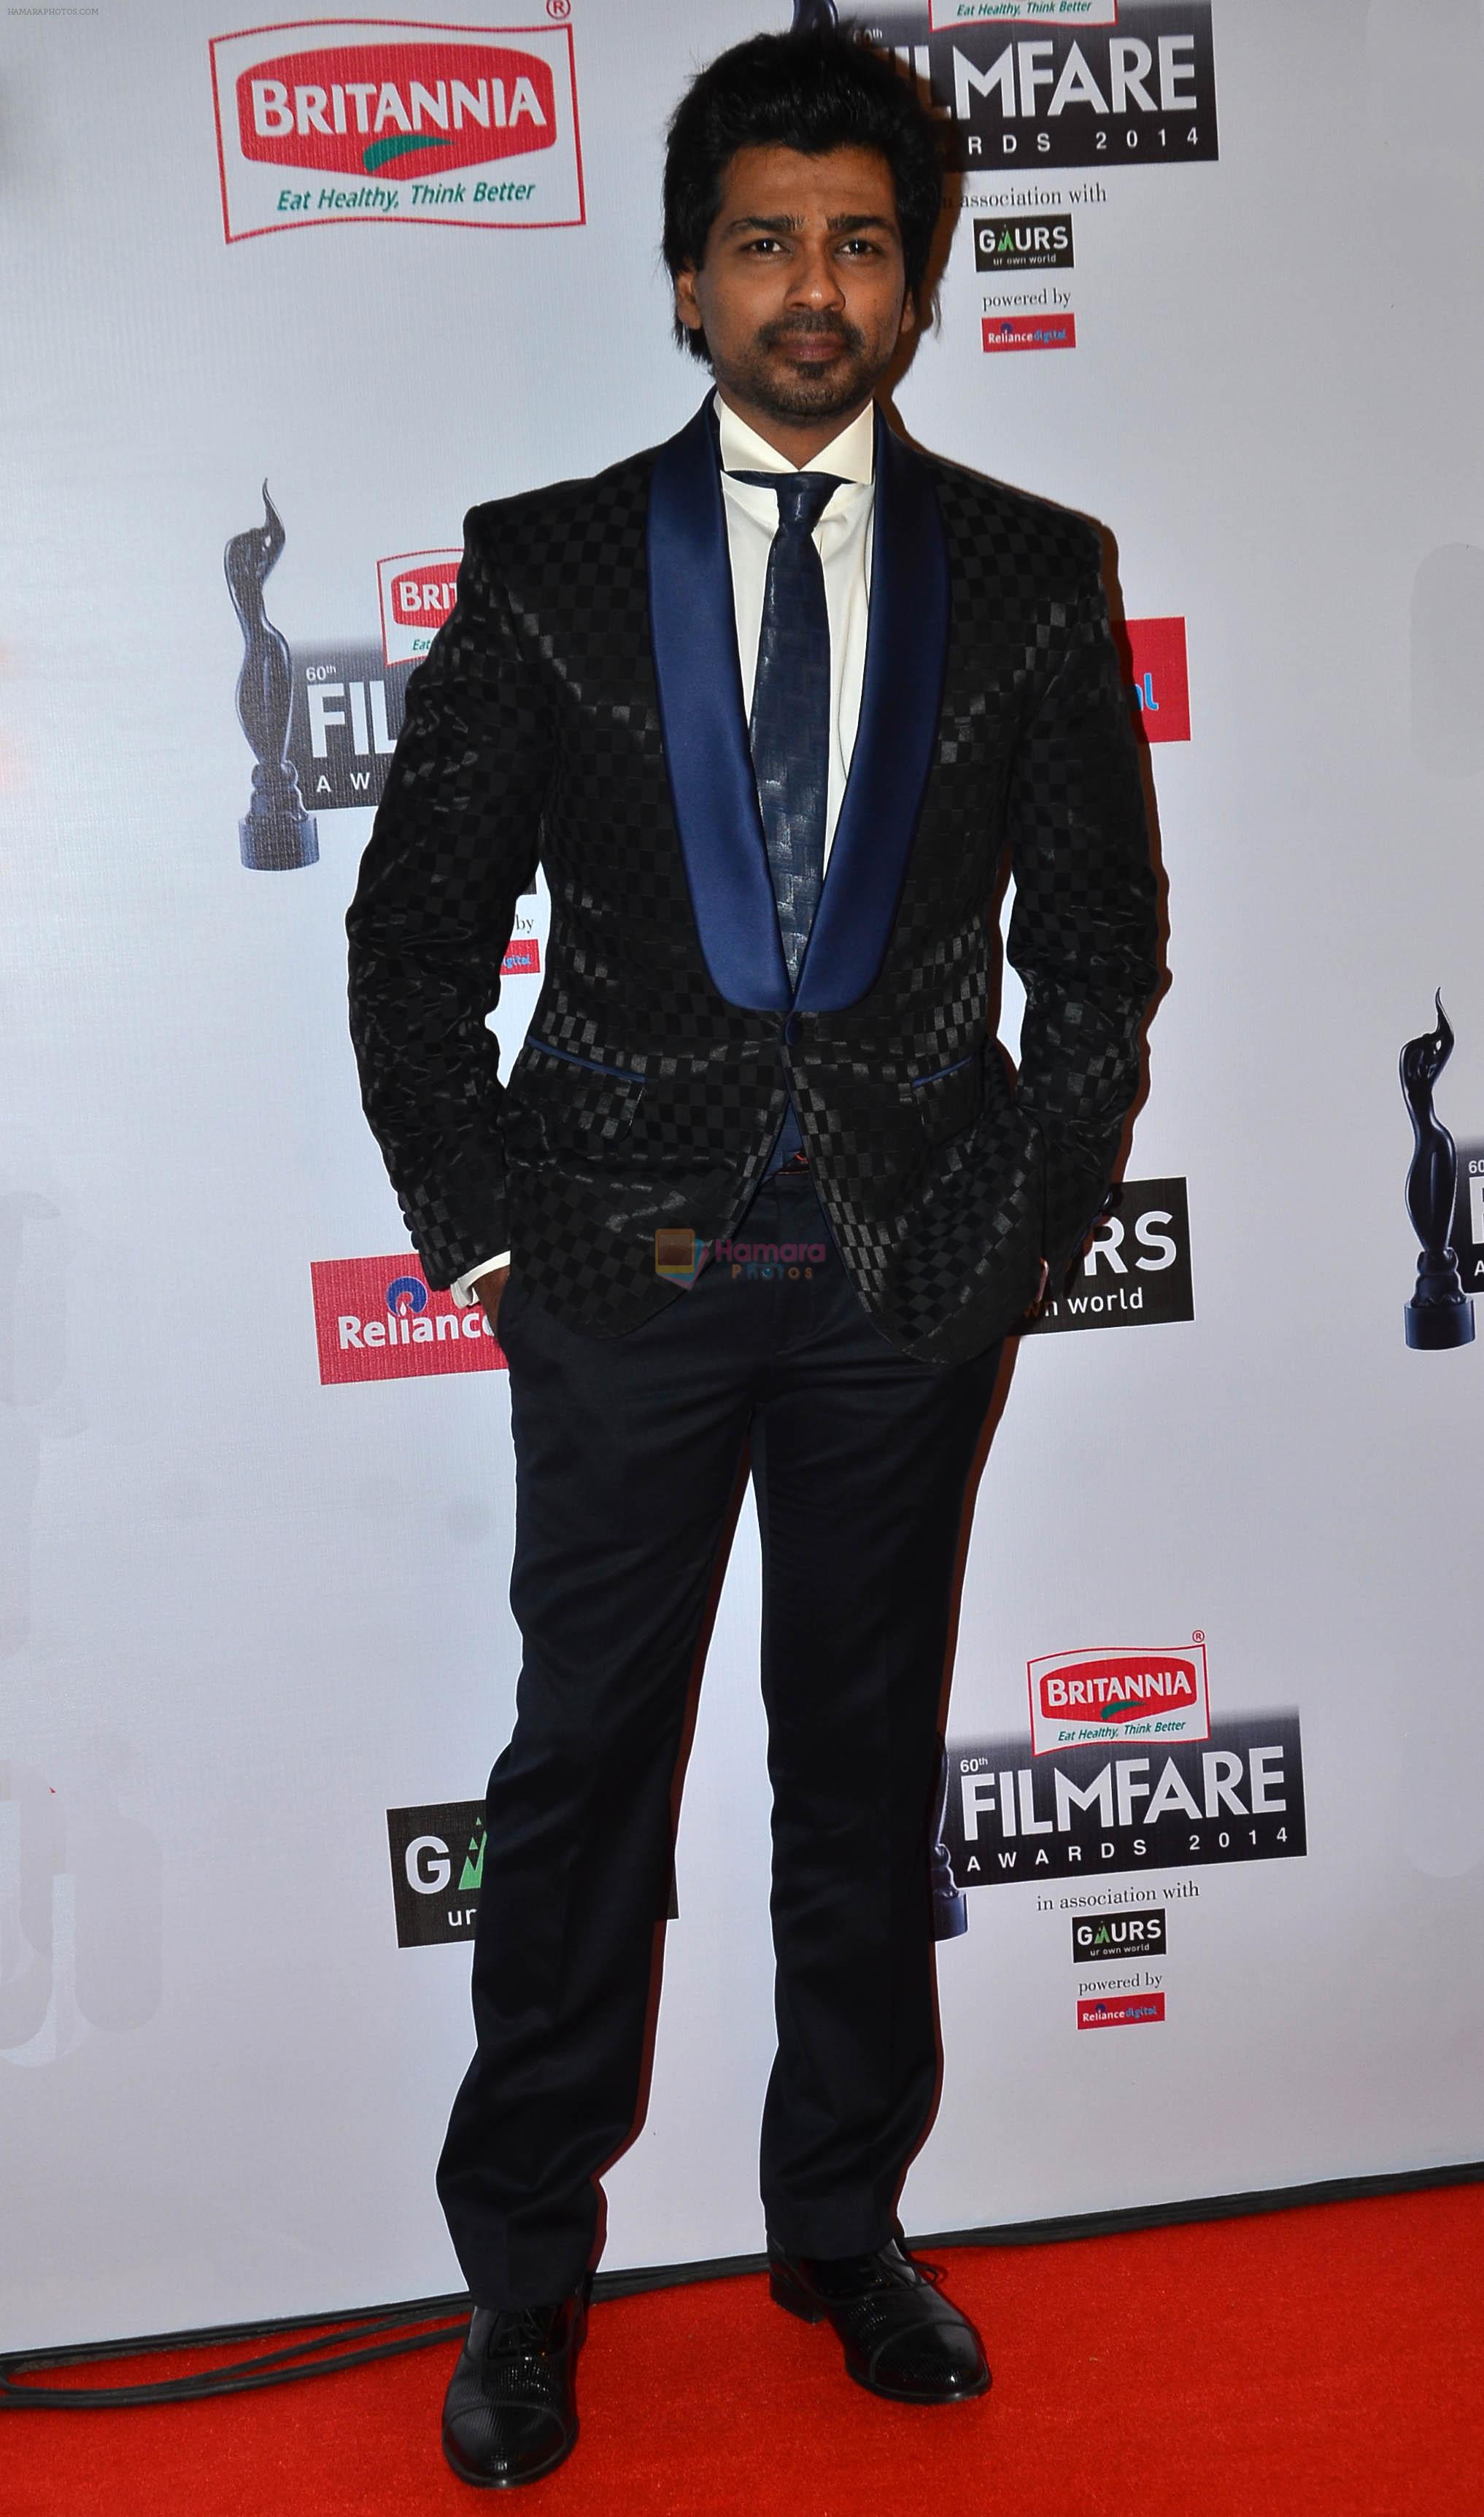 Nikhil Dwivedi graces the red carpet at the 60th Britannia Filmfare Awards